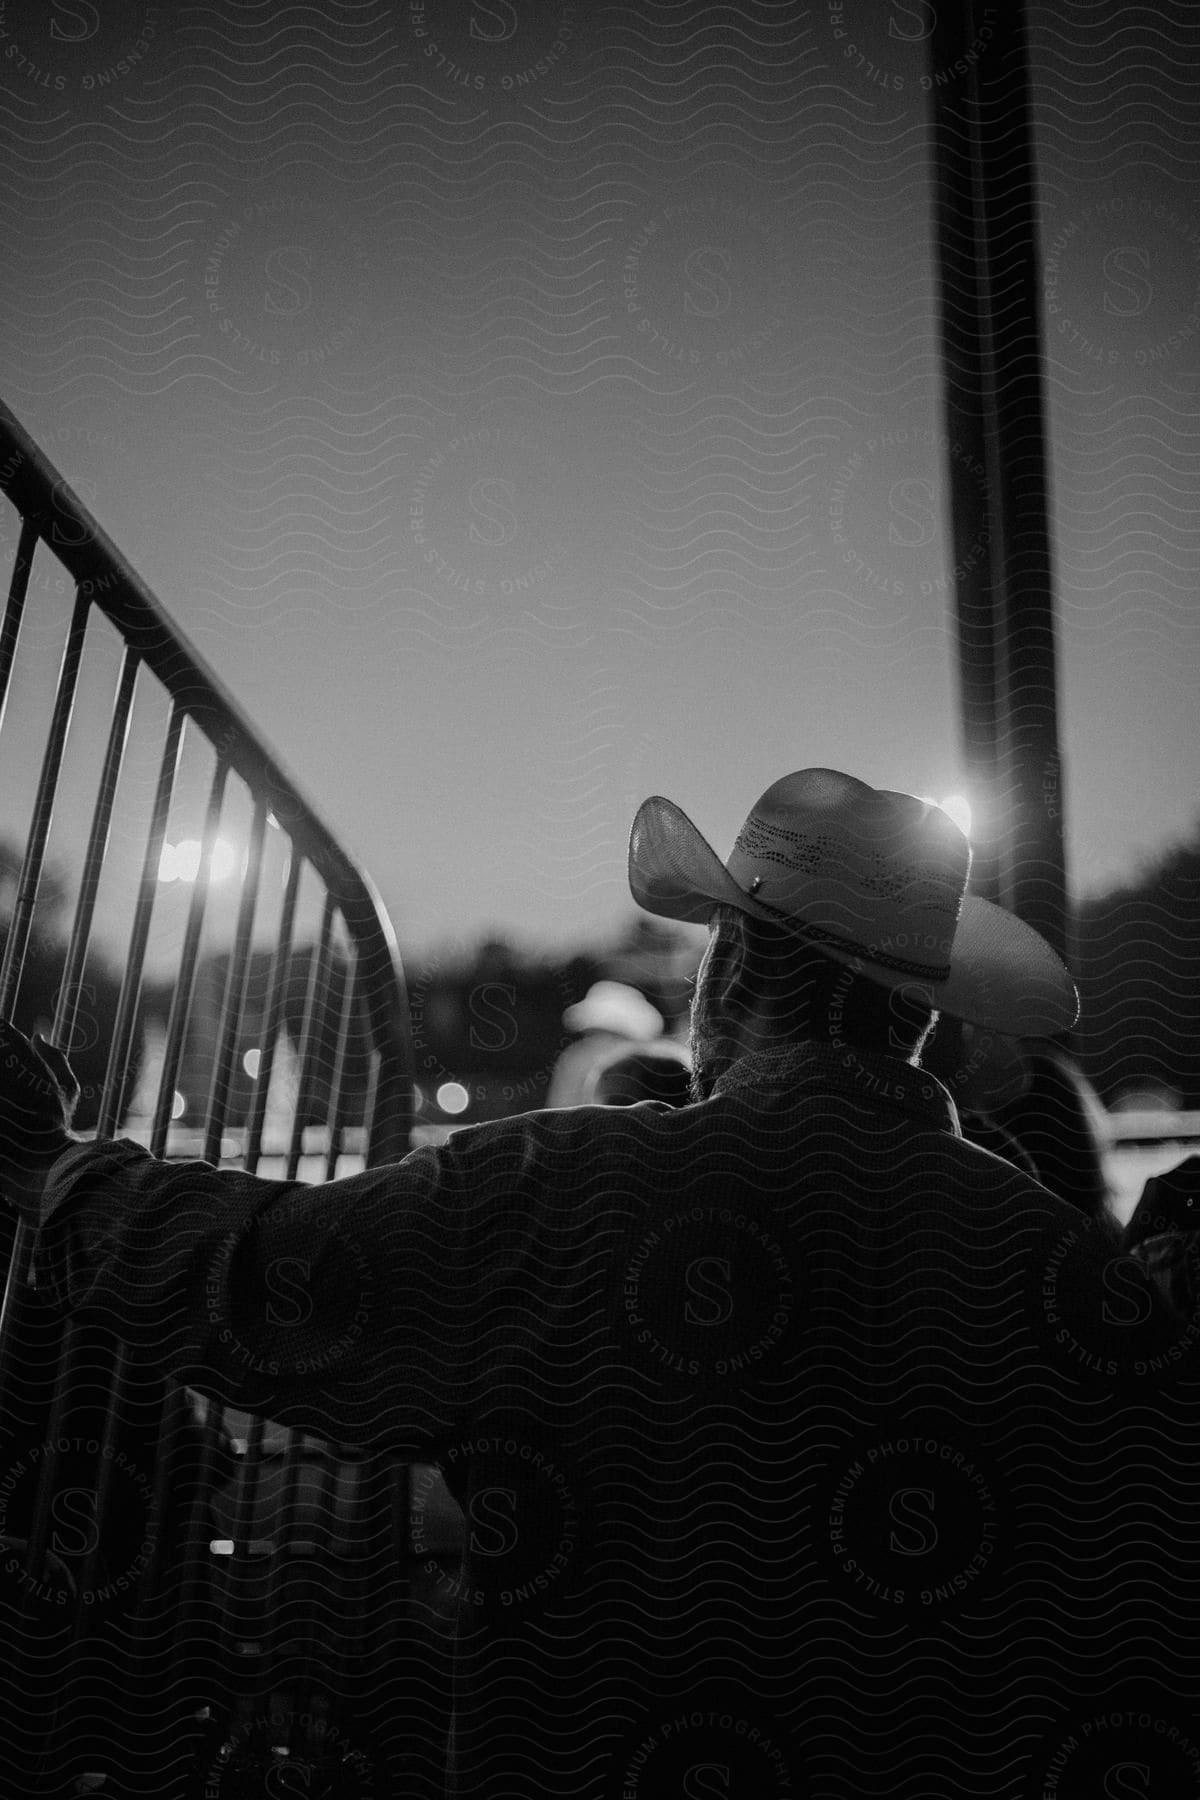 A man wearing a cowboy hat outdoors at night